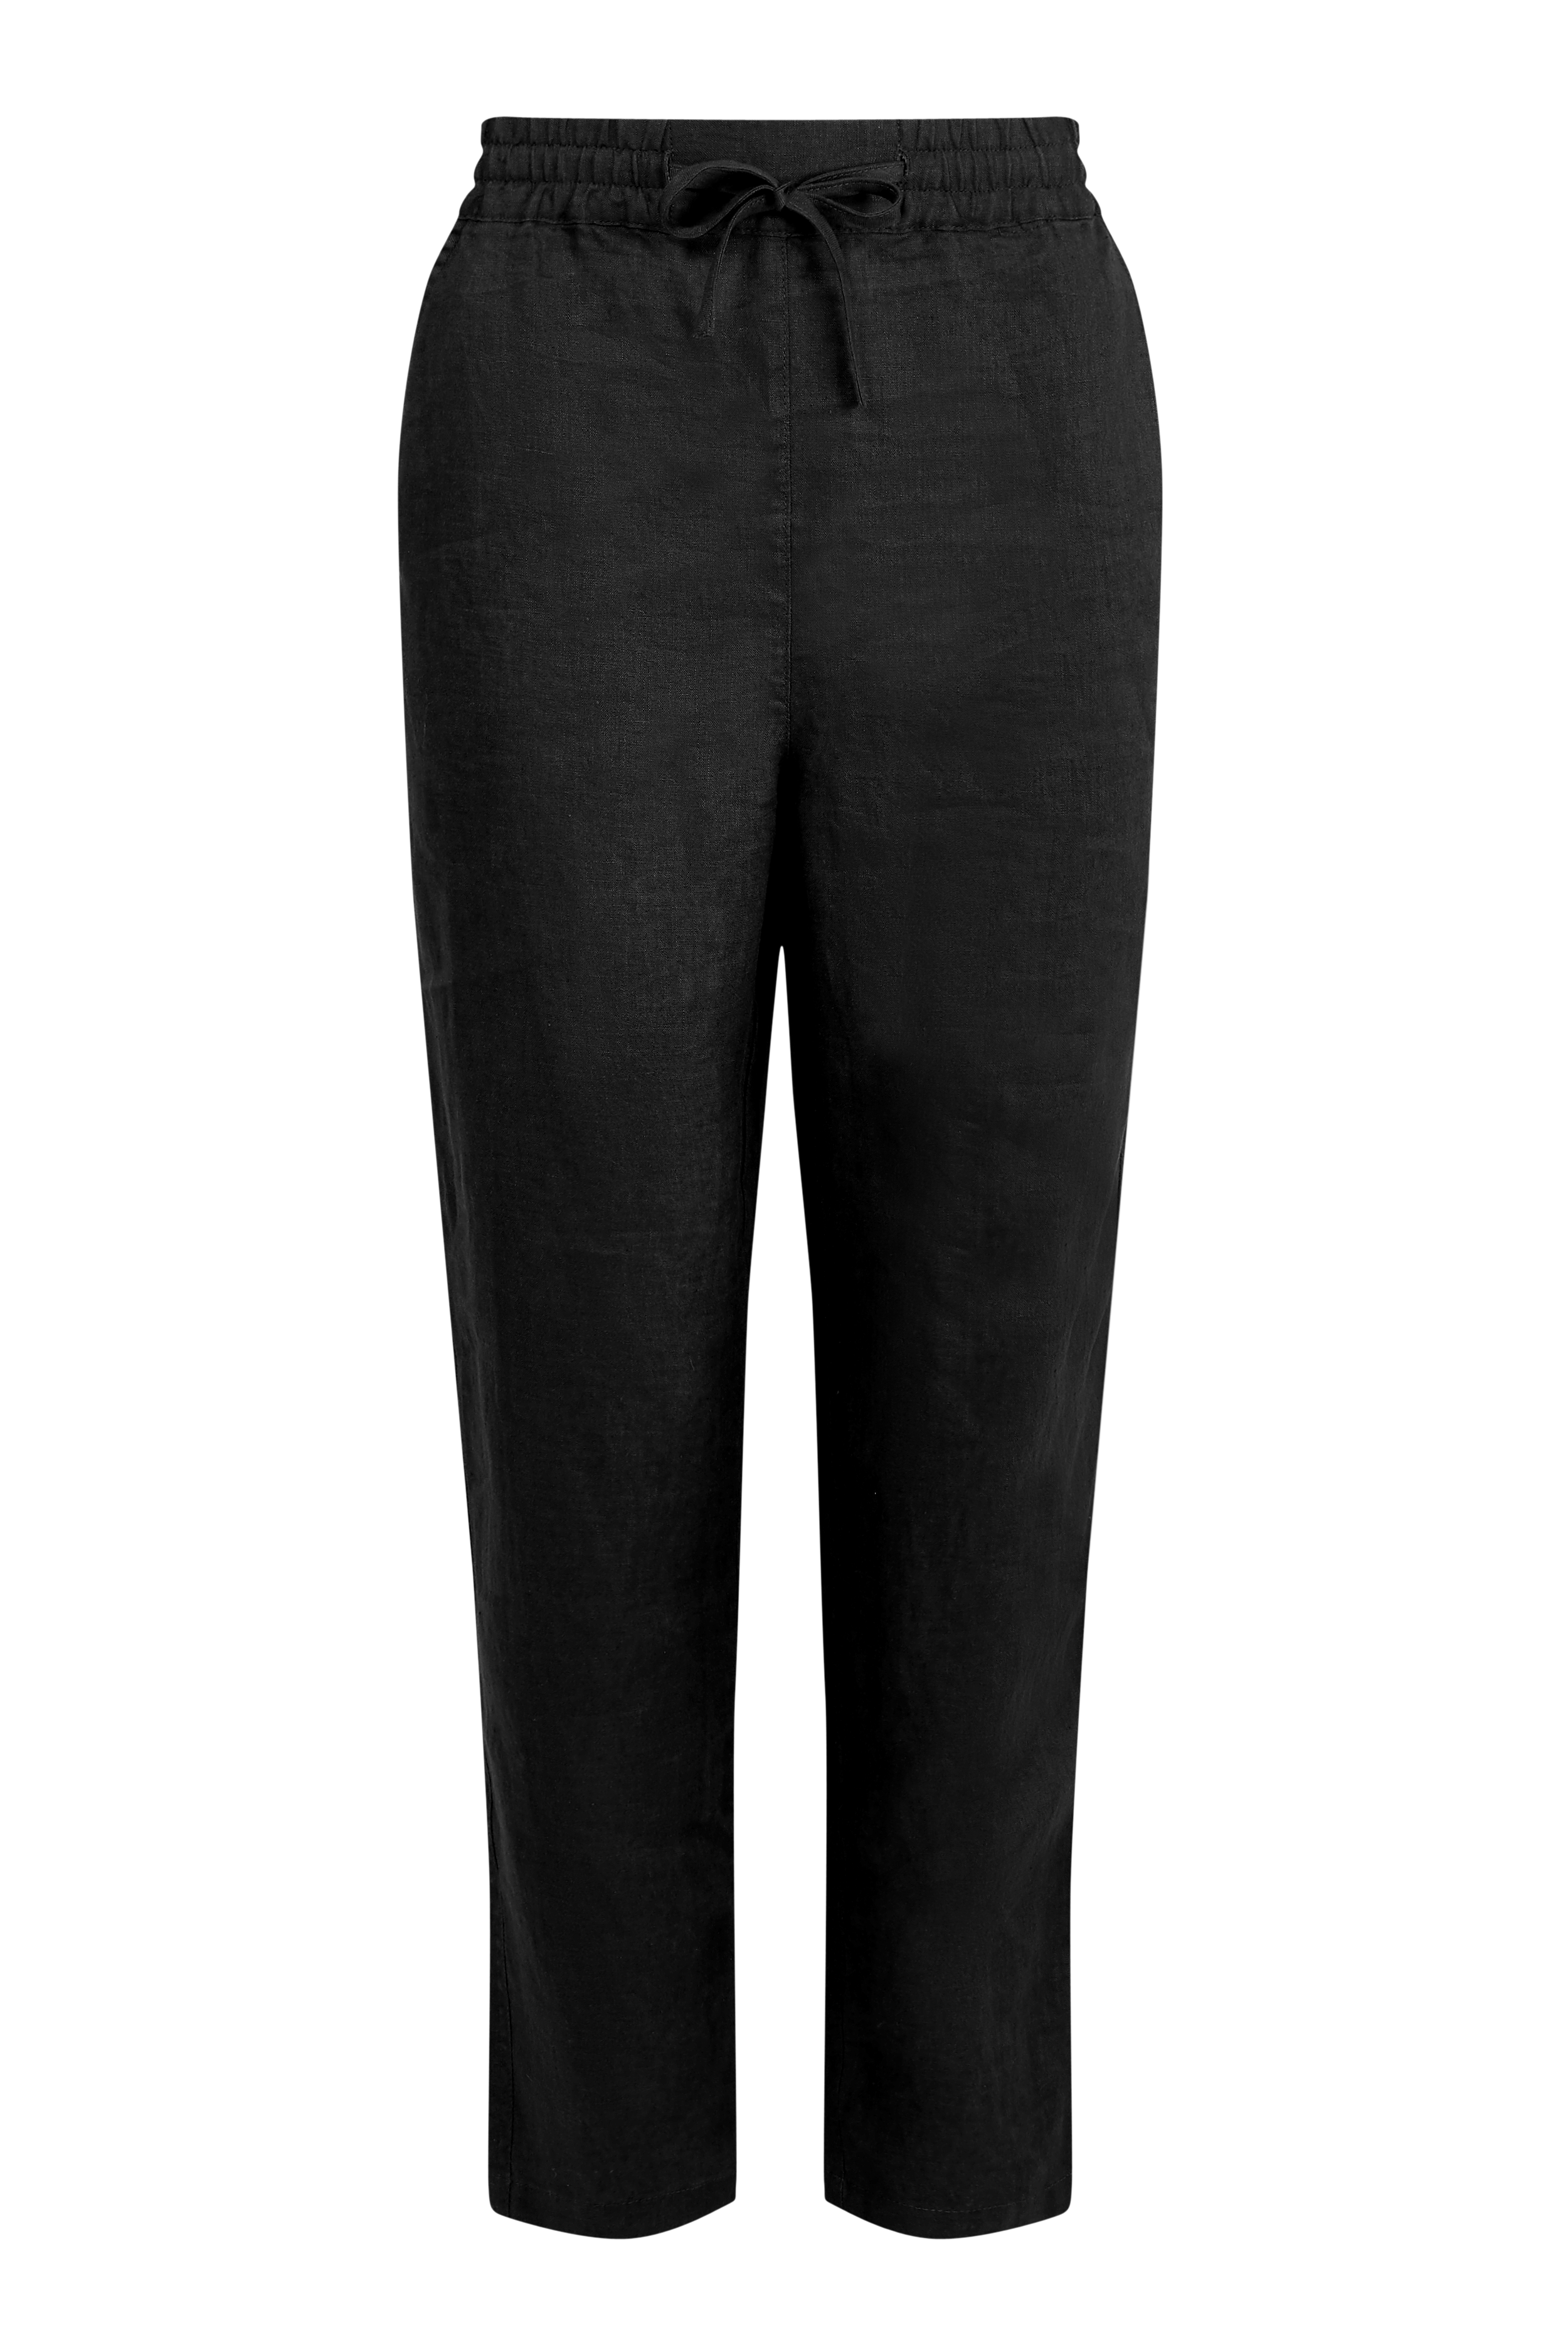 RAMA - Linen Trousers Black